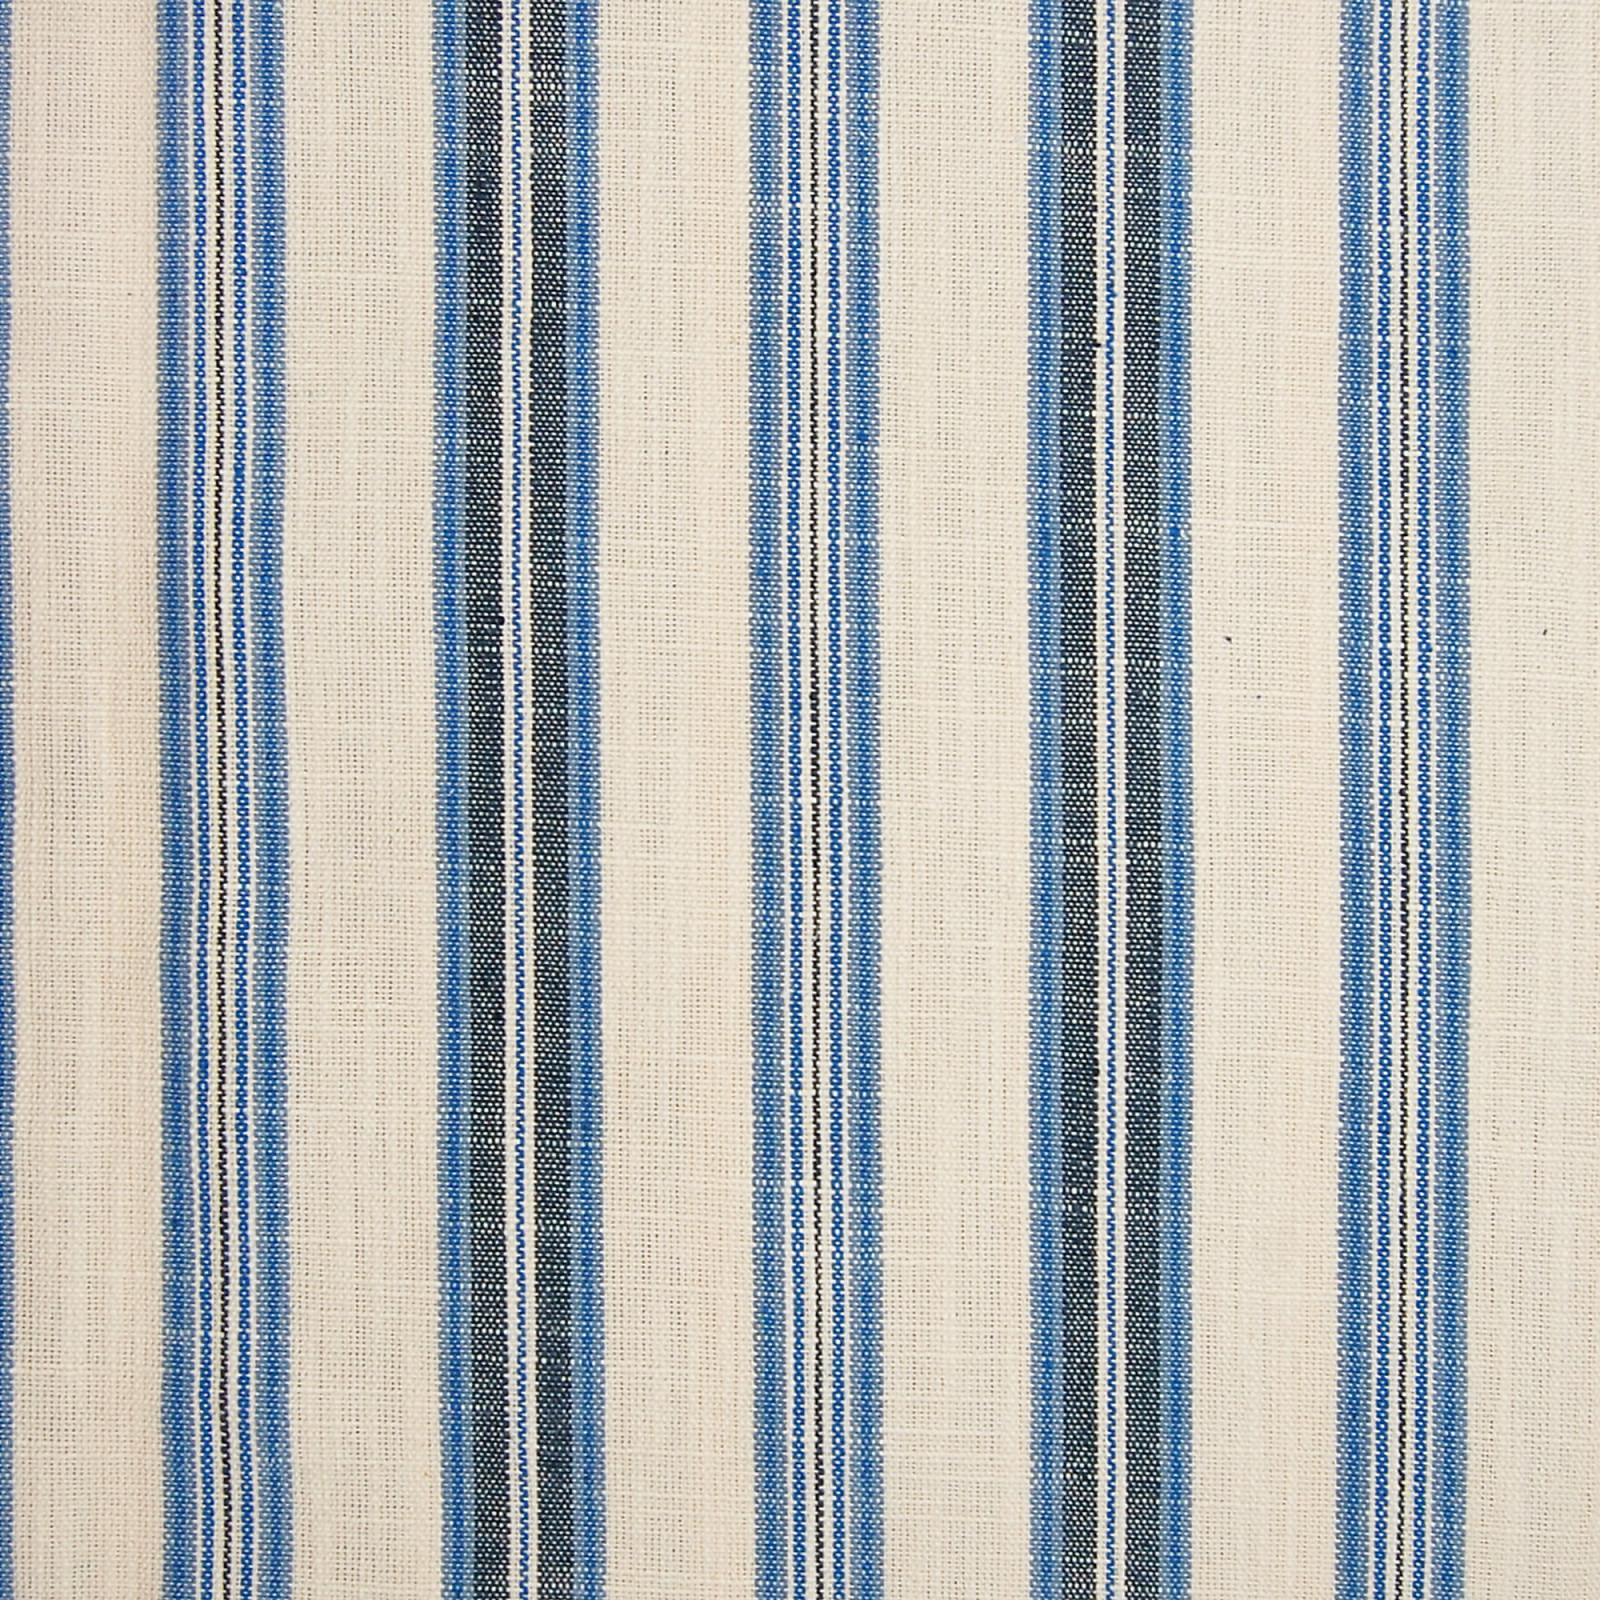 Caspian Blue Stripe Linen Upholstery Fabric